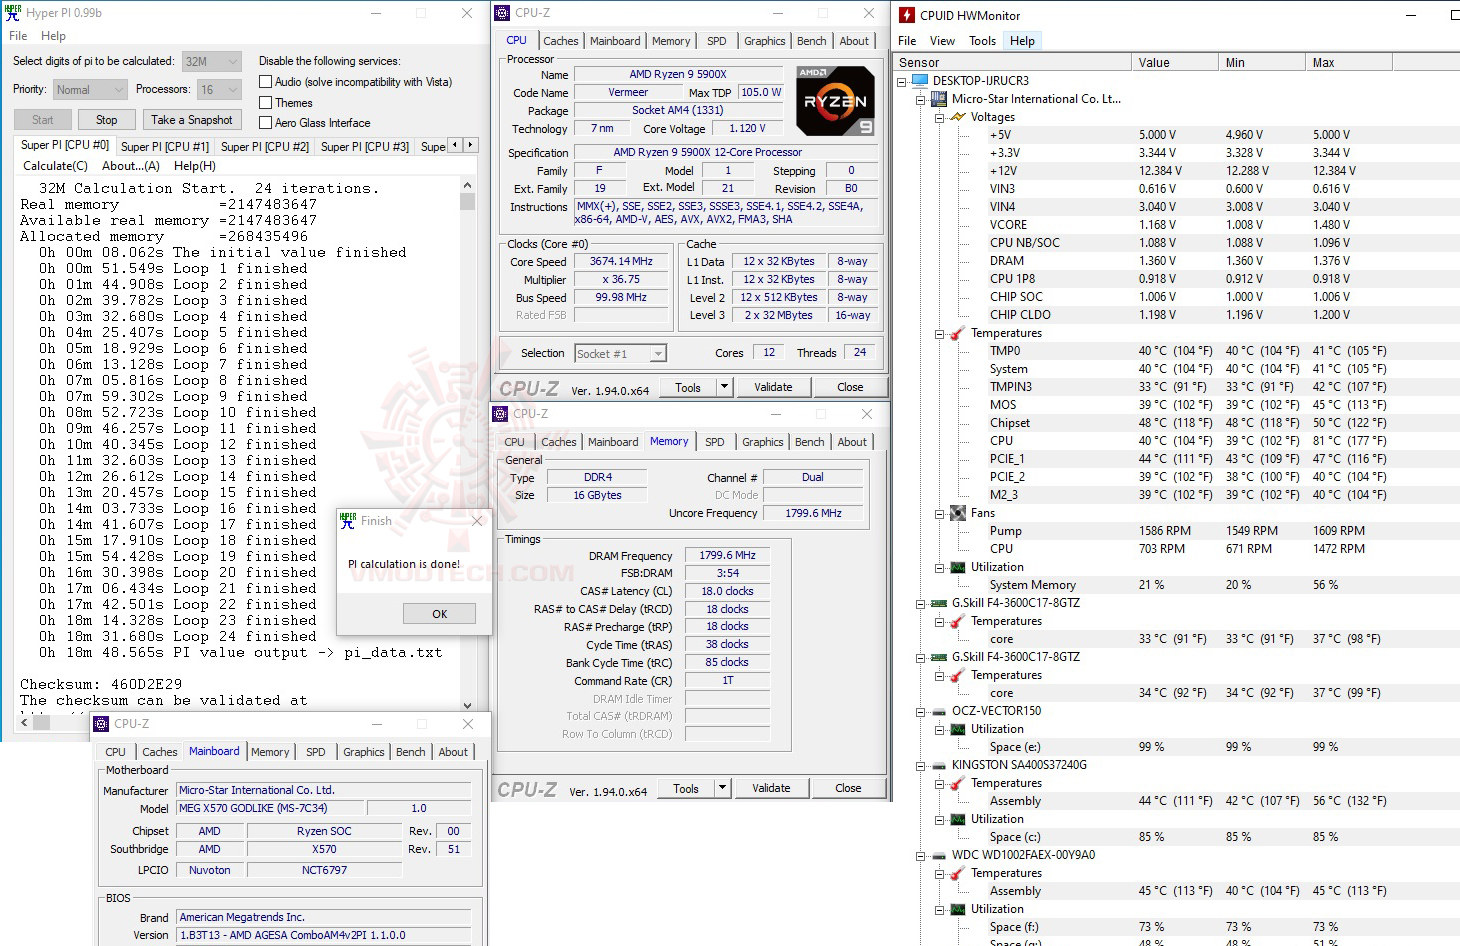 h32 1 AMD RYZEN 9 5900X PROCESSOR REVIEW